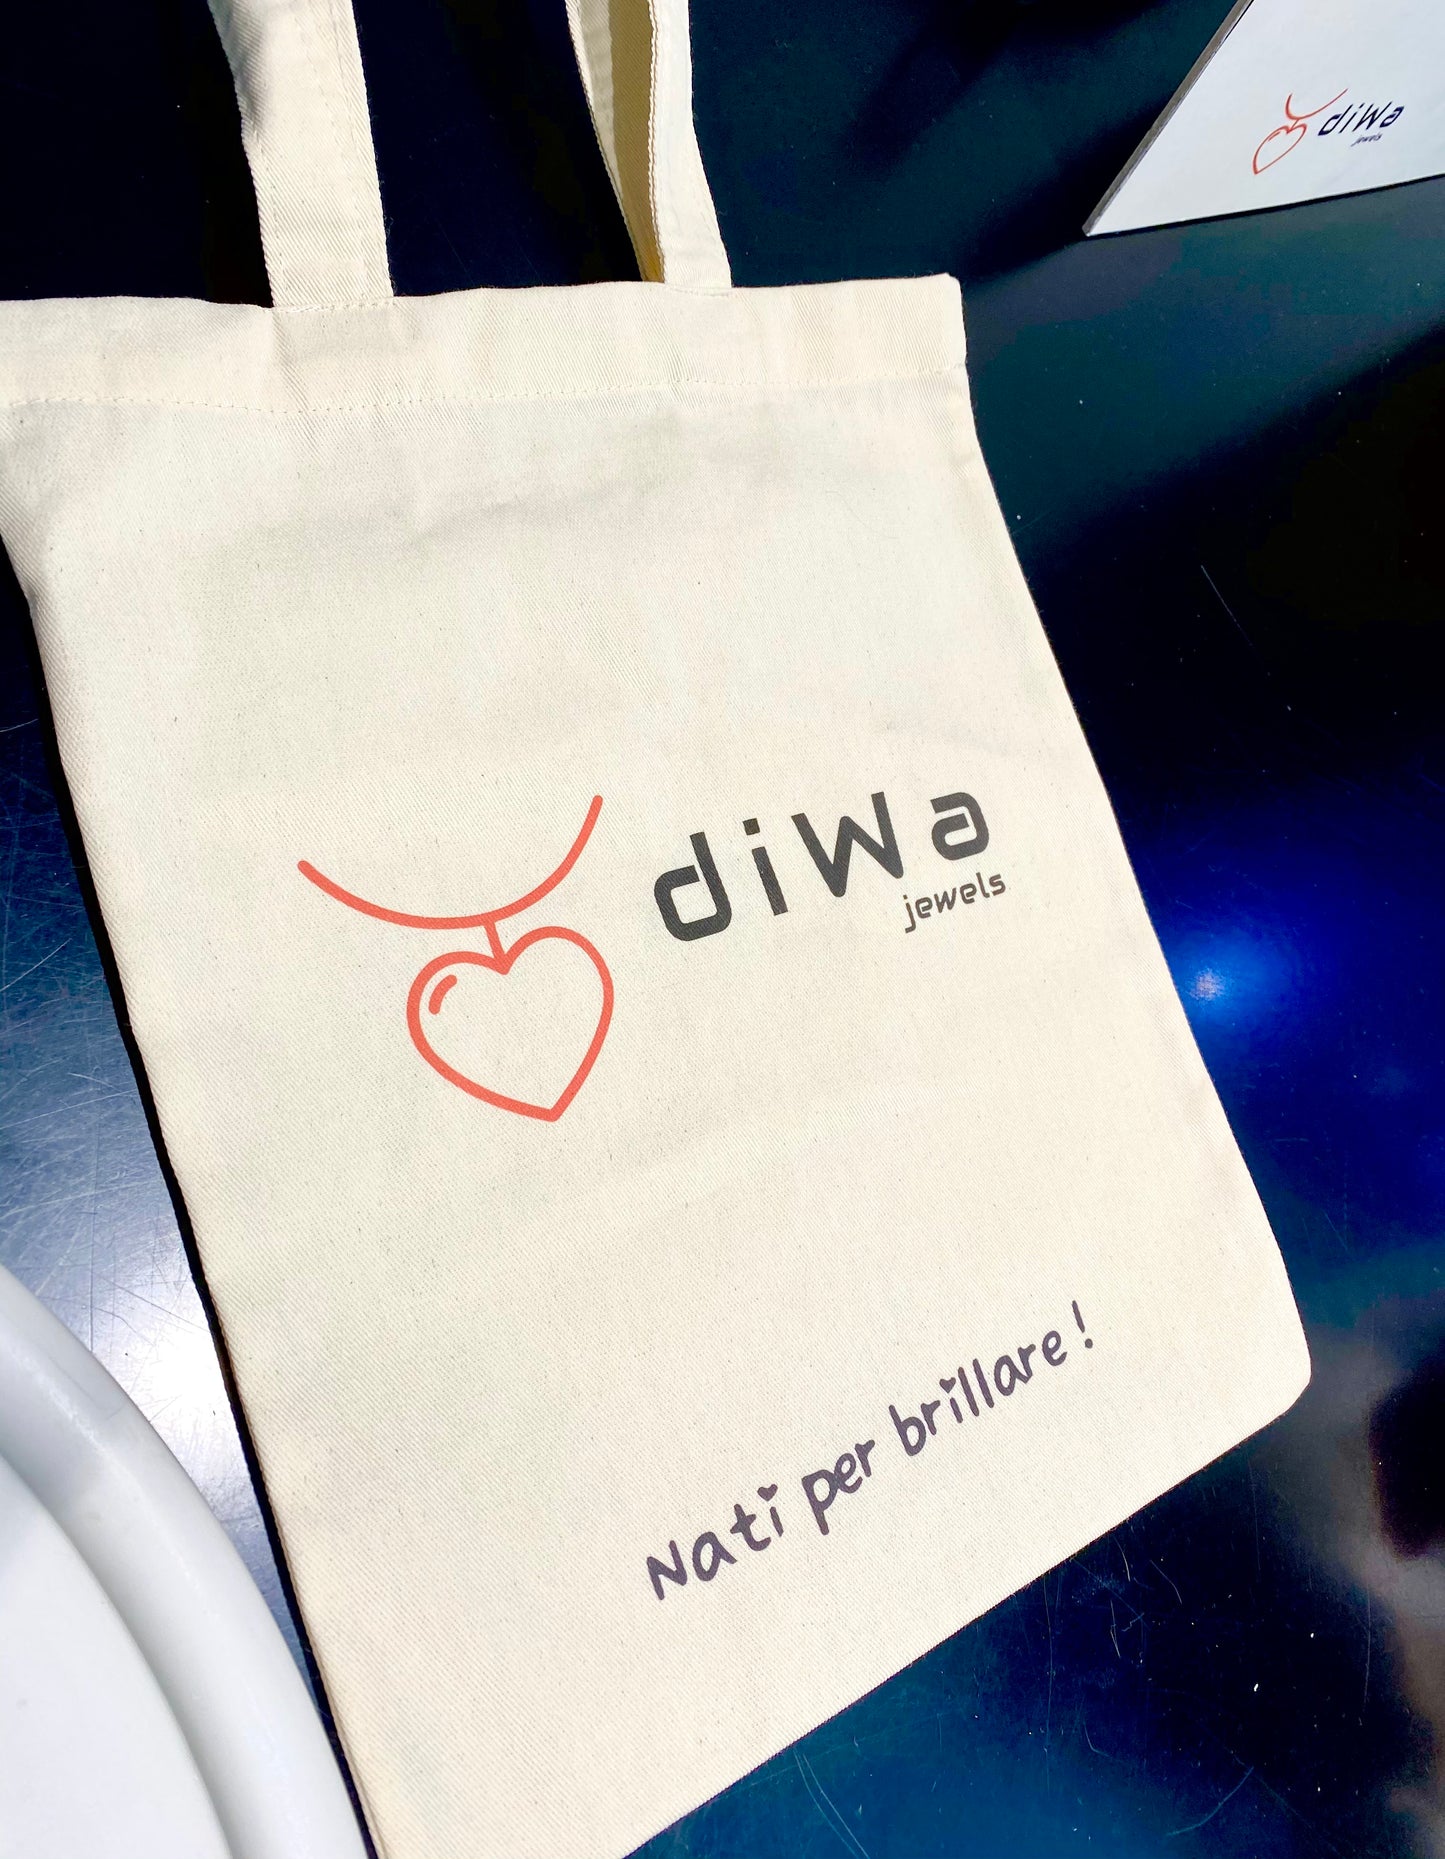 DiWa Jewels gift voucher